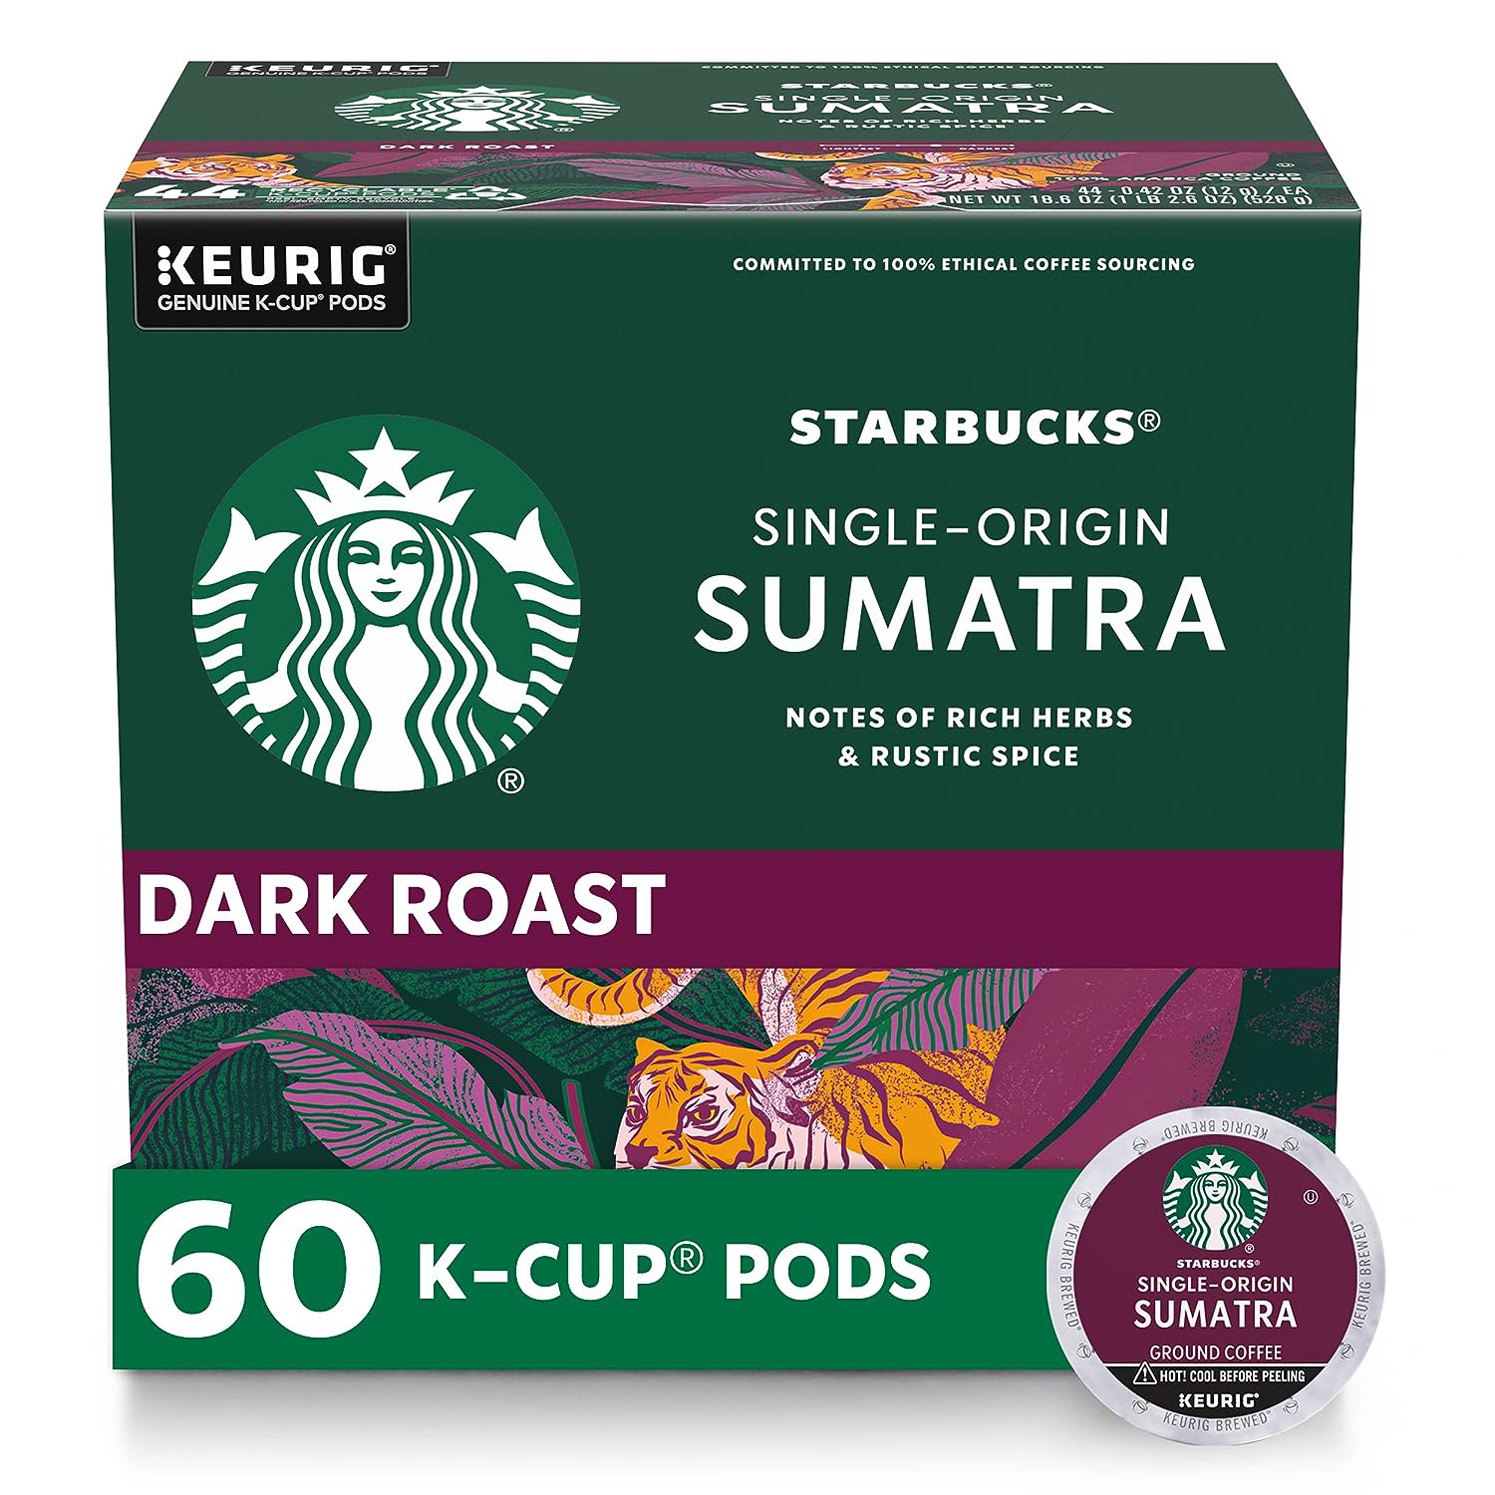 Starbucks K-Cup Coffee Pods Dark Roast Coffee Sumatra for Keurig Brewers – 6 boxes